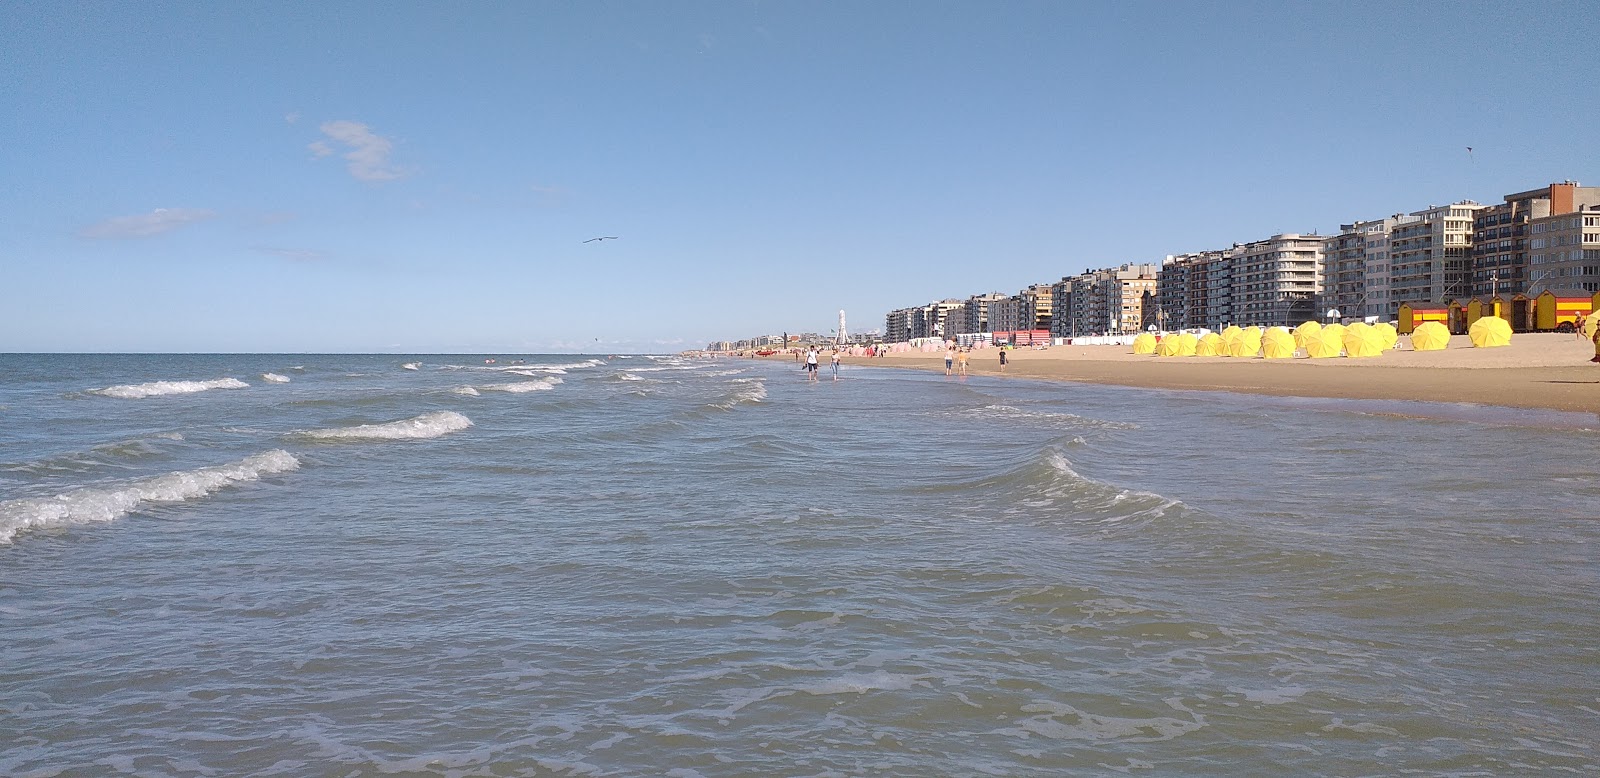 Photo of De Panne Strand beach resort area